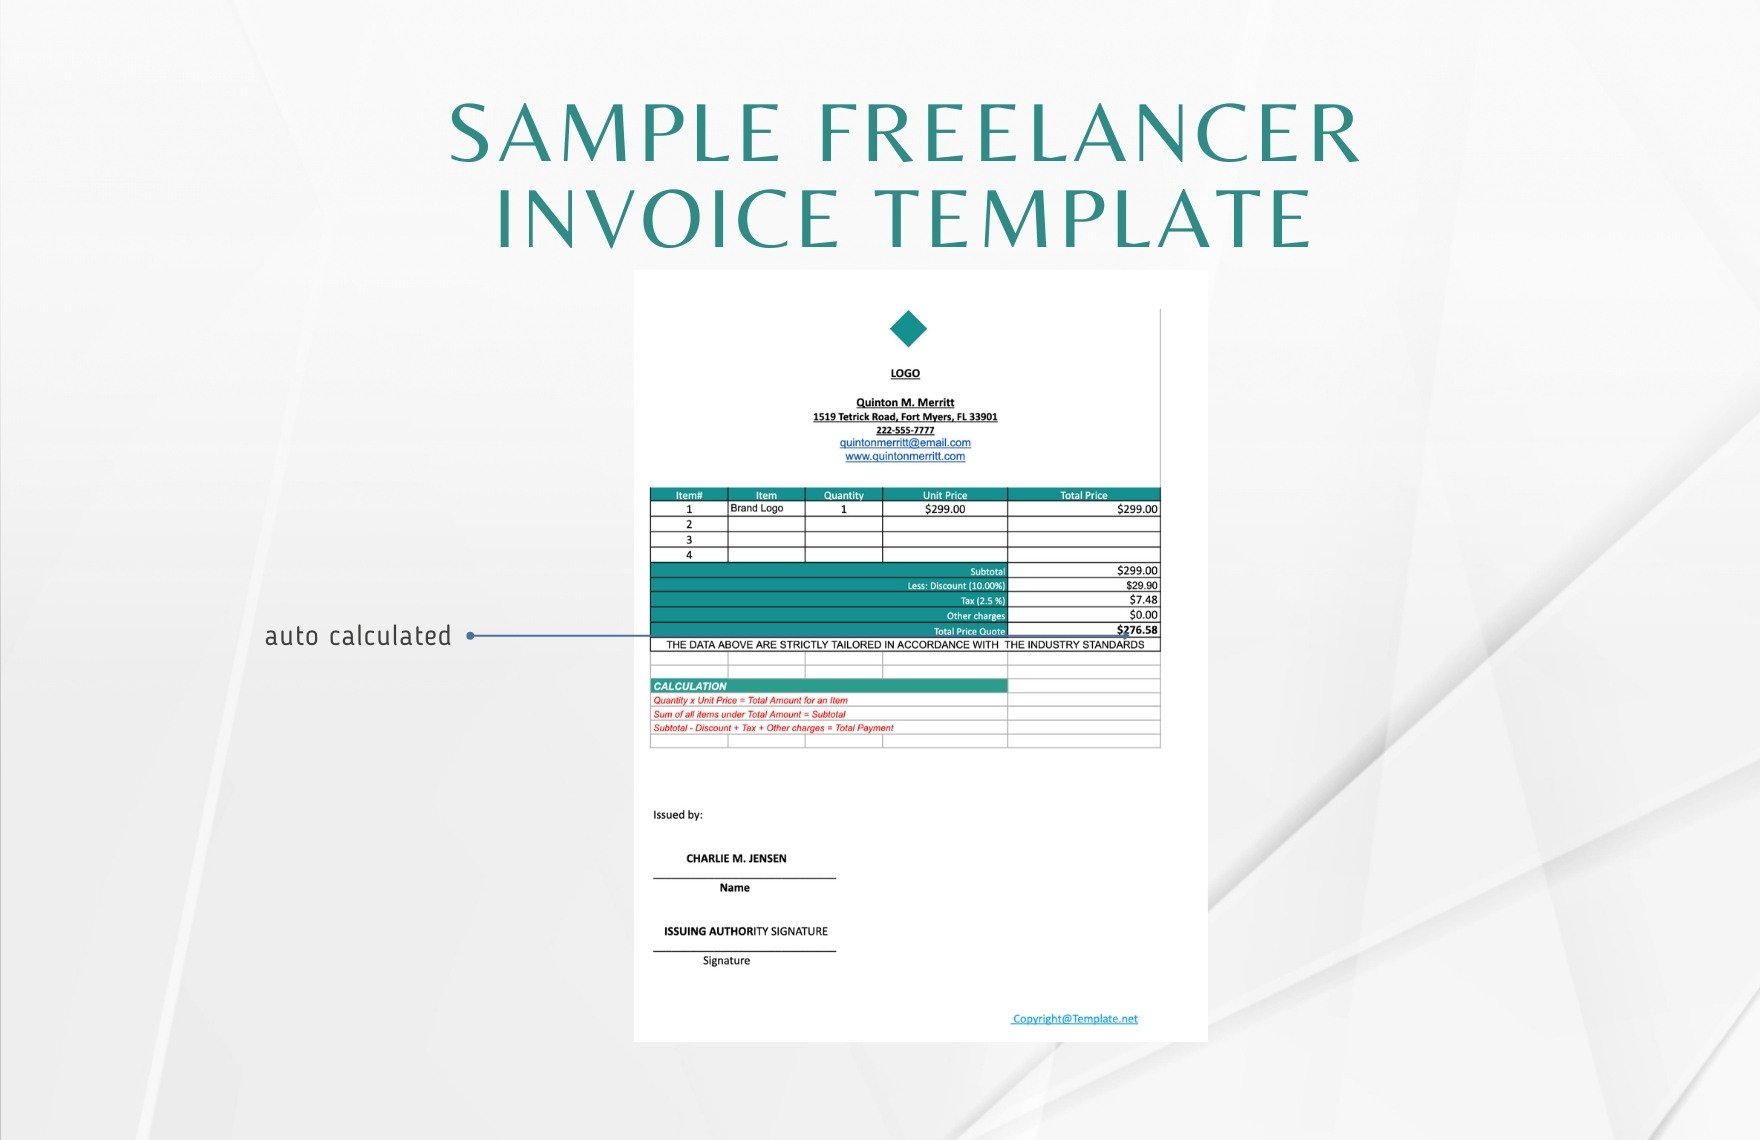 Sample Freelancer Invoice Template